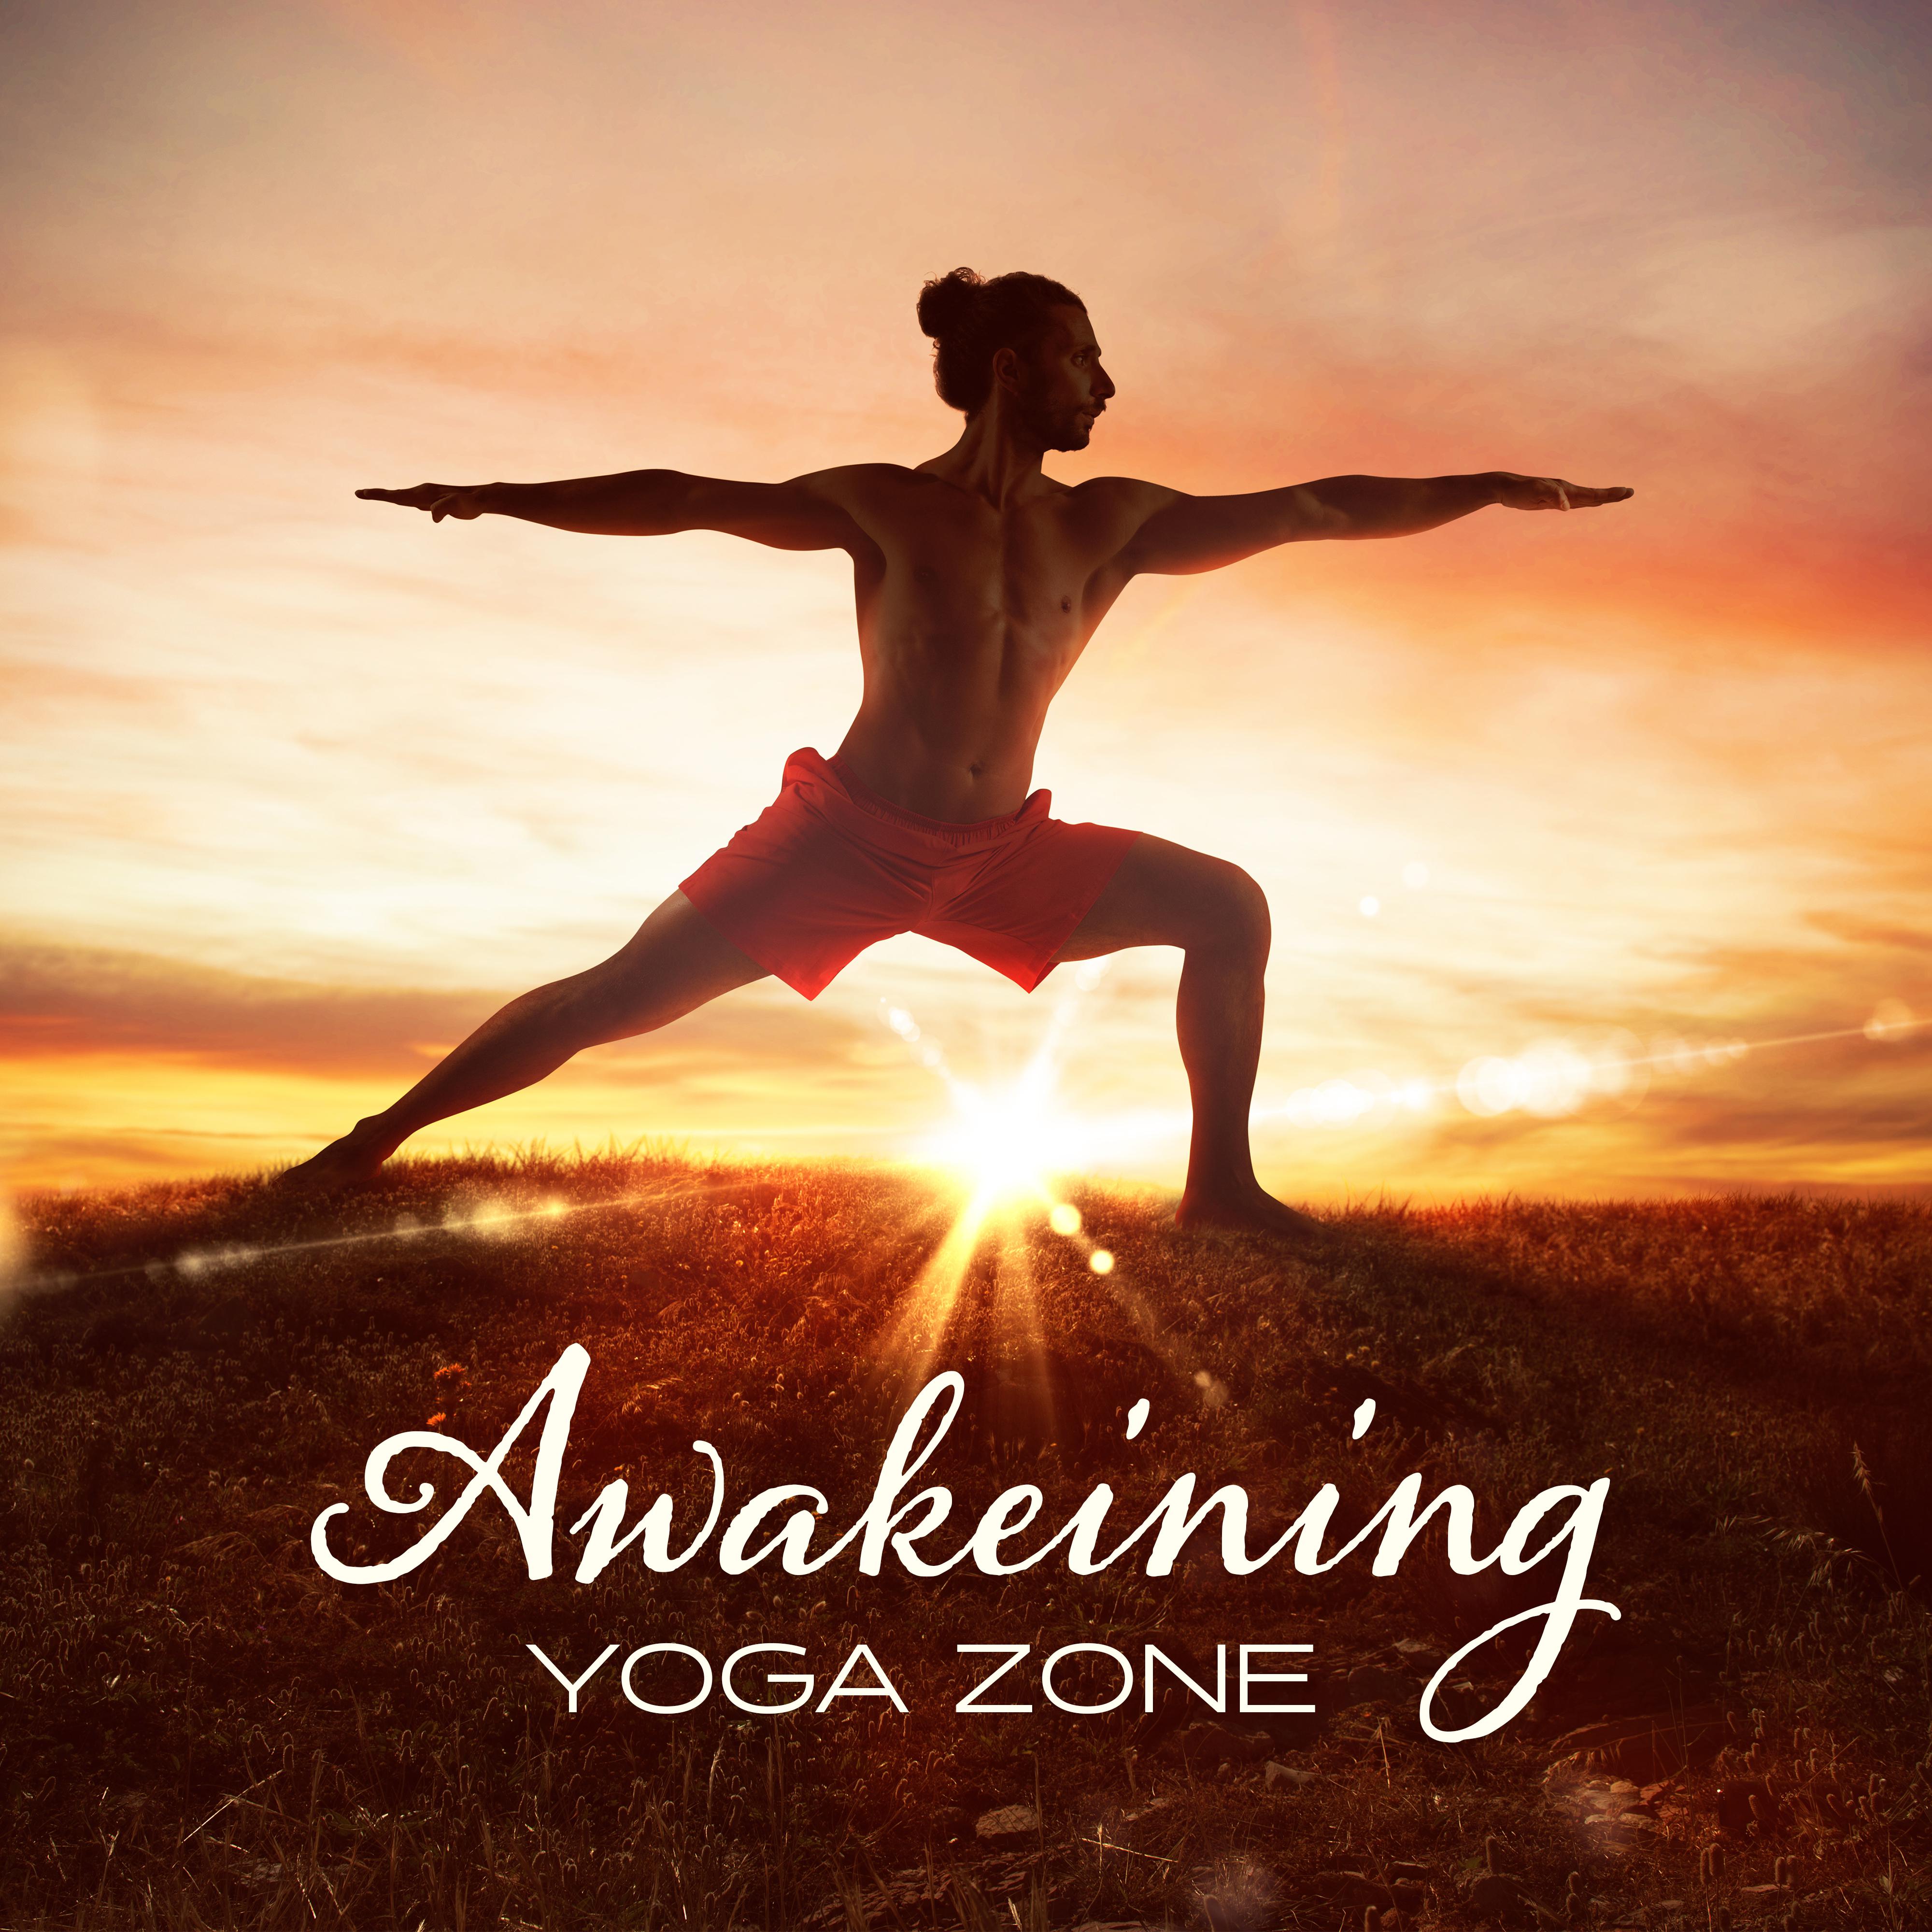 Awakeining Yoga Zone